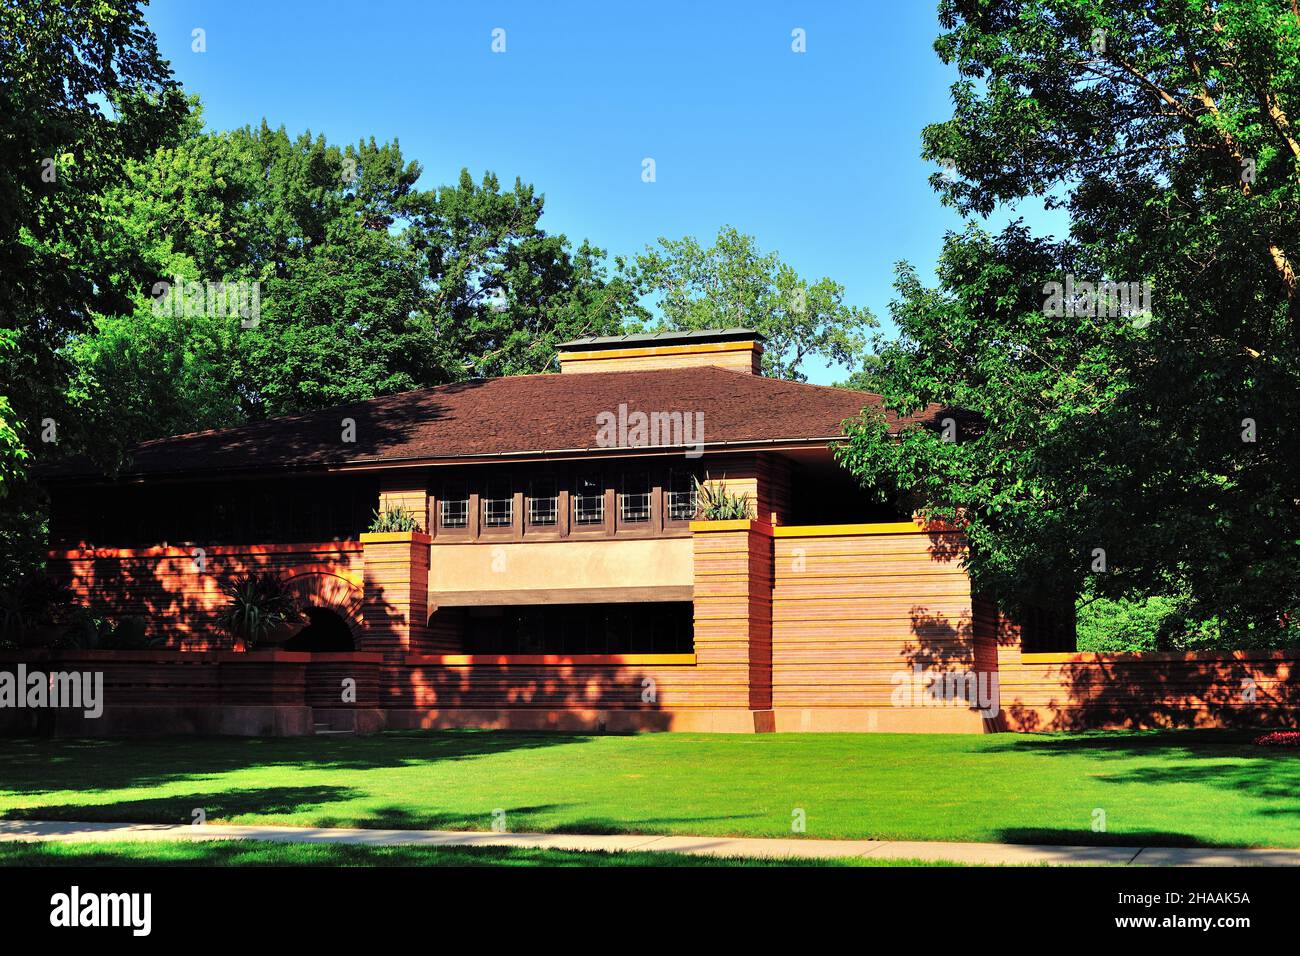 Oak Park, Illinois. The Arthur Heurtley House designed by famed architect Frank Lloyd Wright. Stock Photo